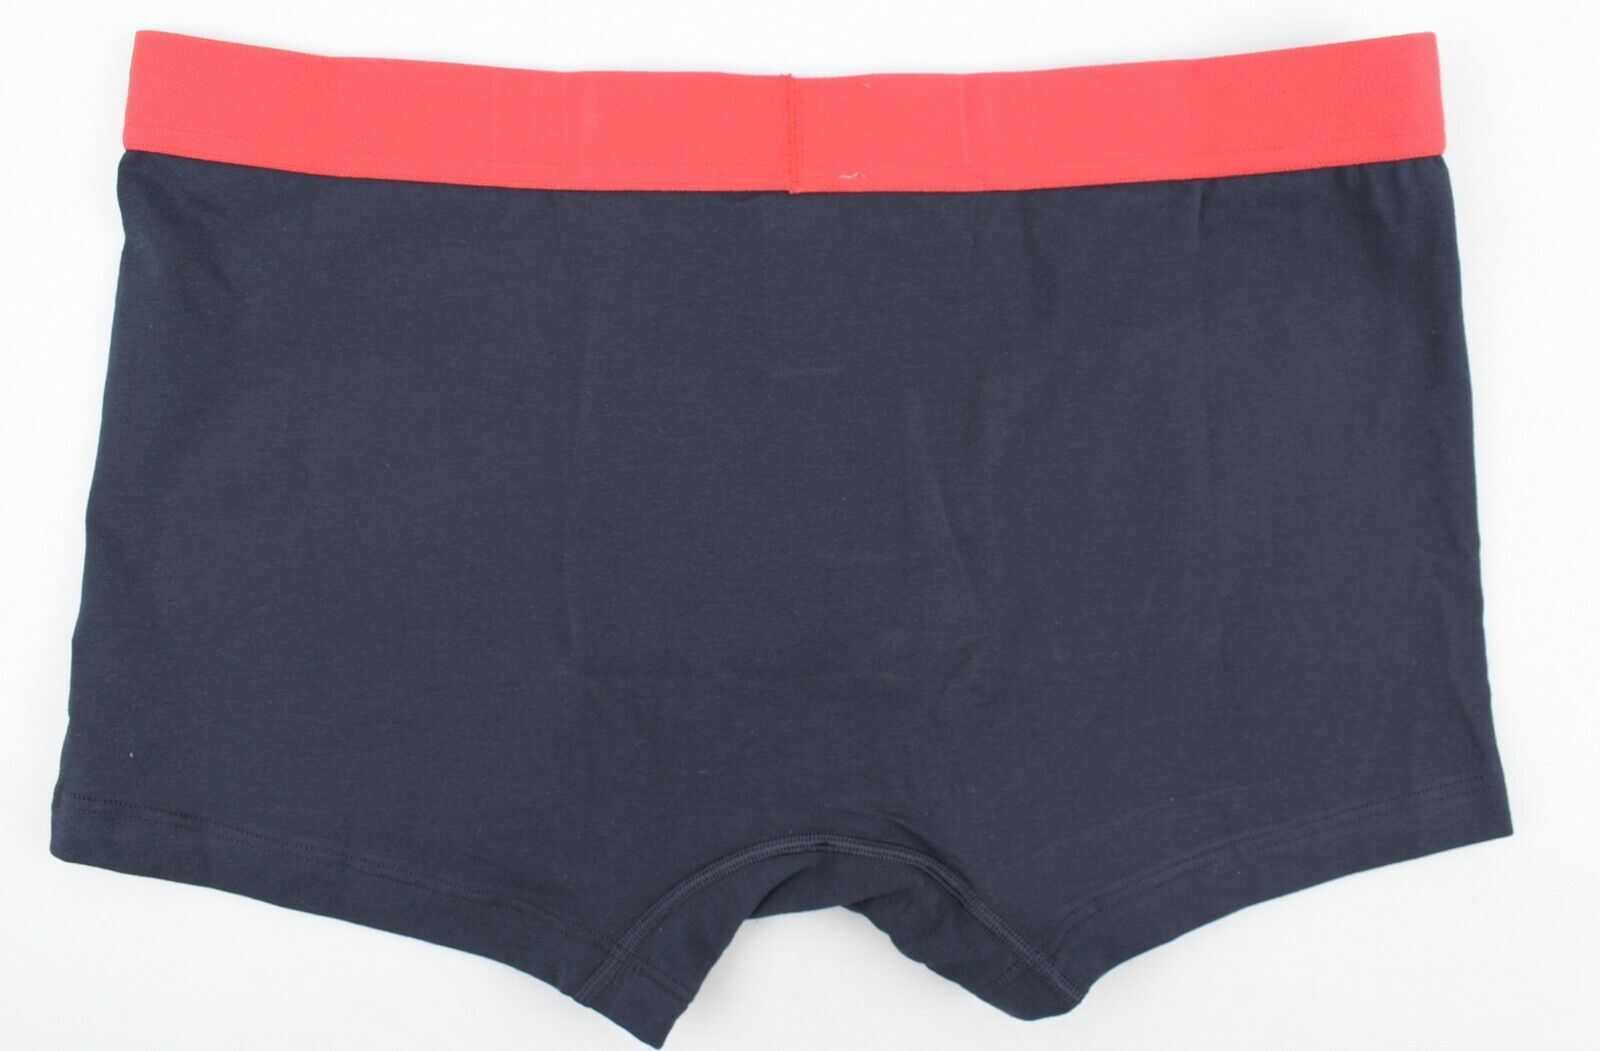 TOMMY HILFIGER Underwear: Men's Boxer Trunk, Navy Blue, size L